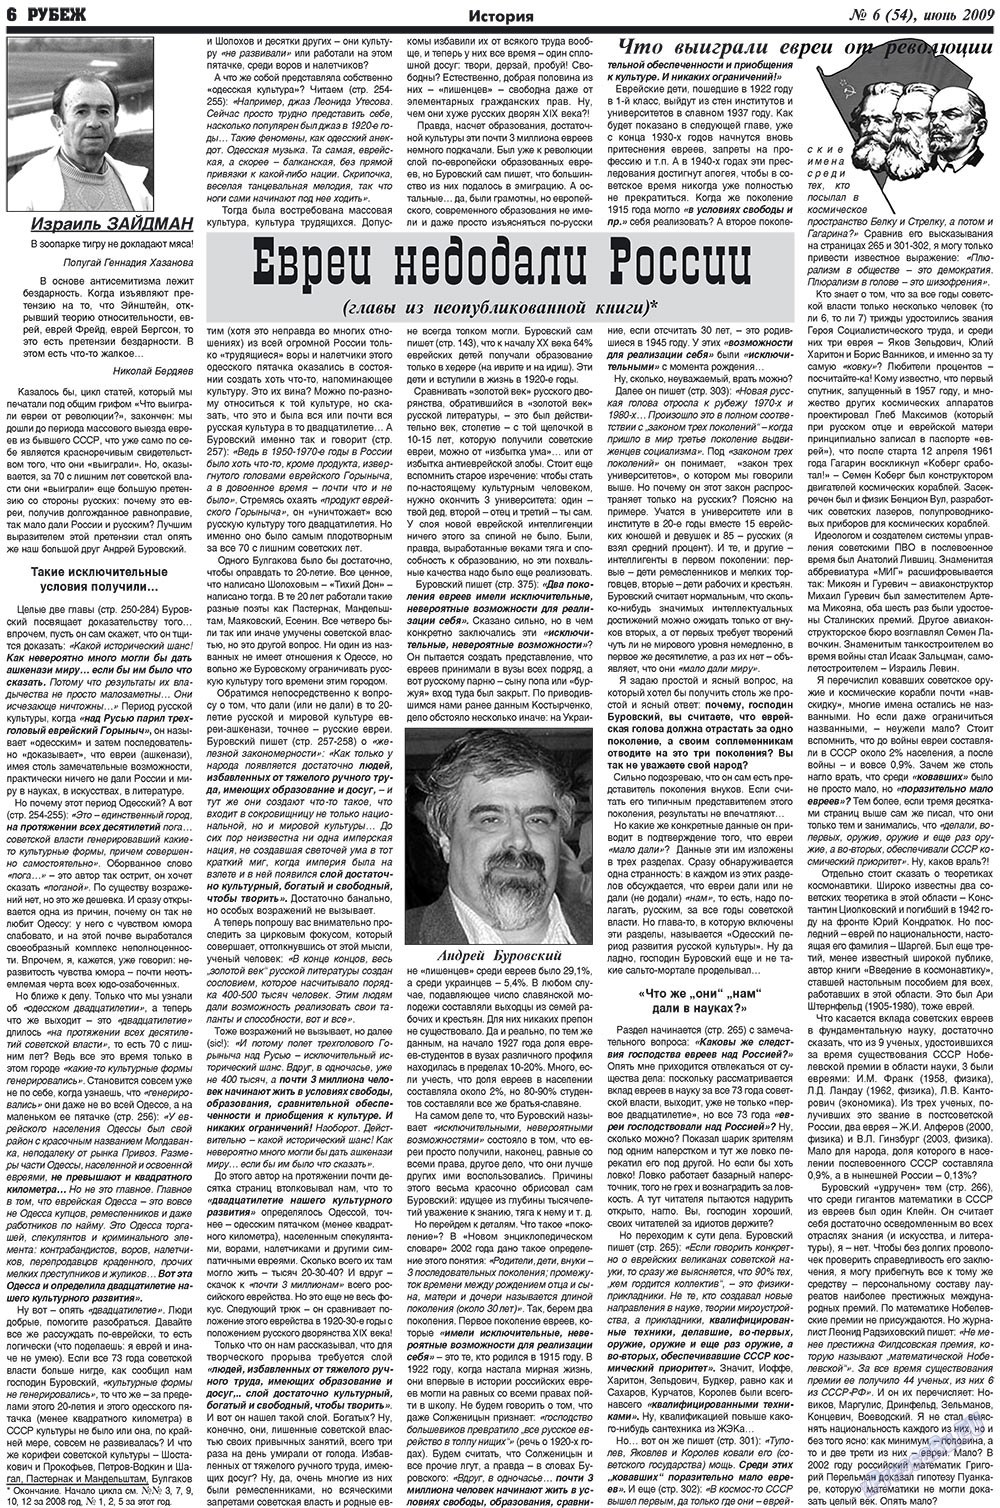 Рубеж, газета. 2009 №6 стр.6